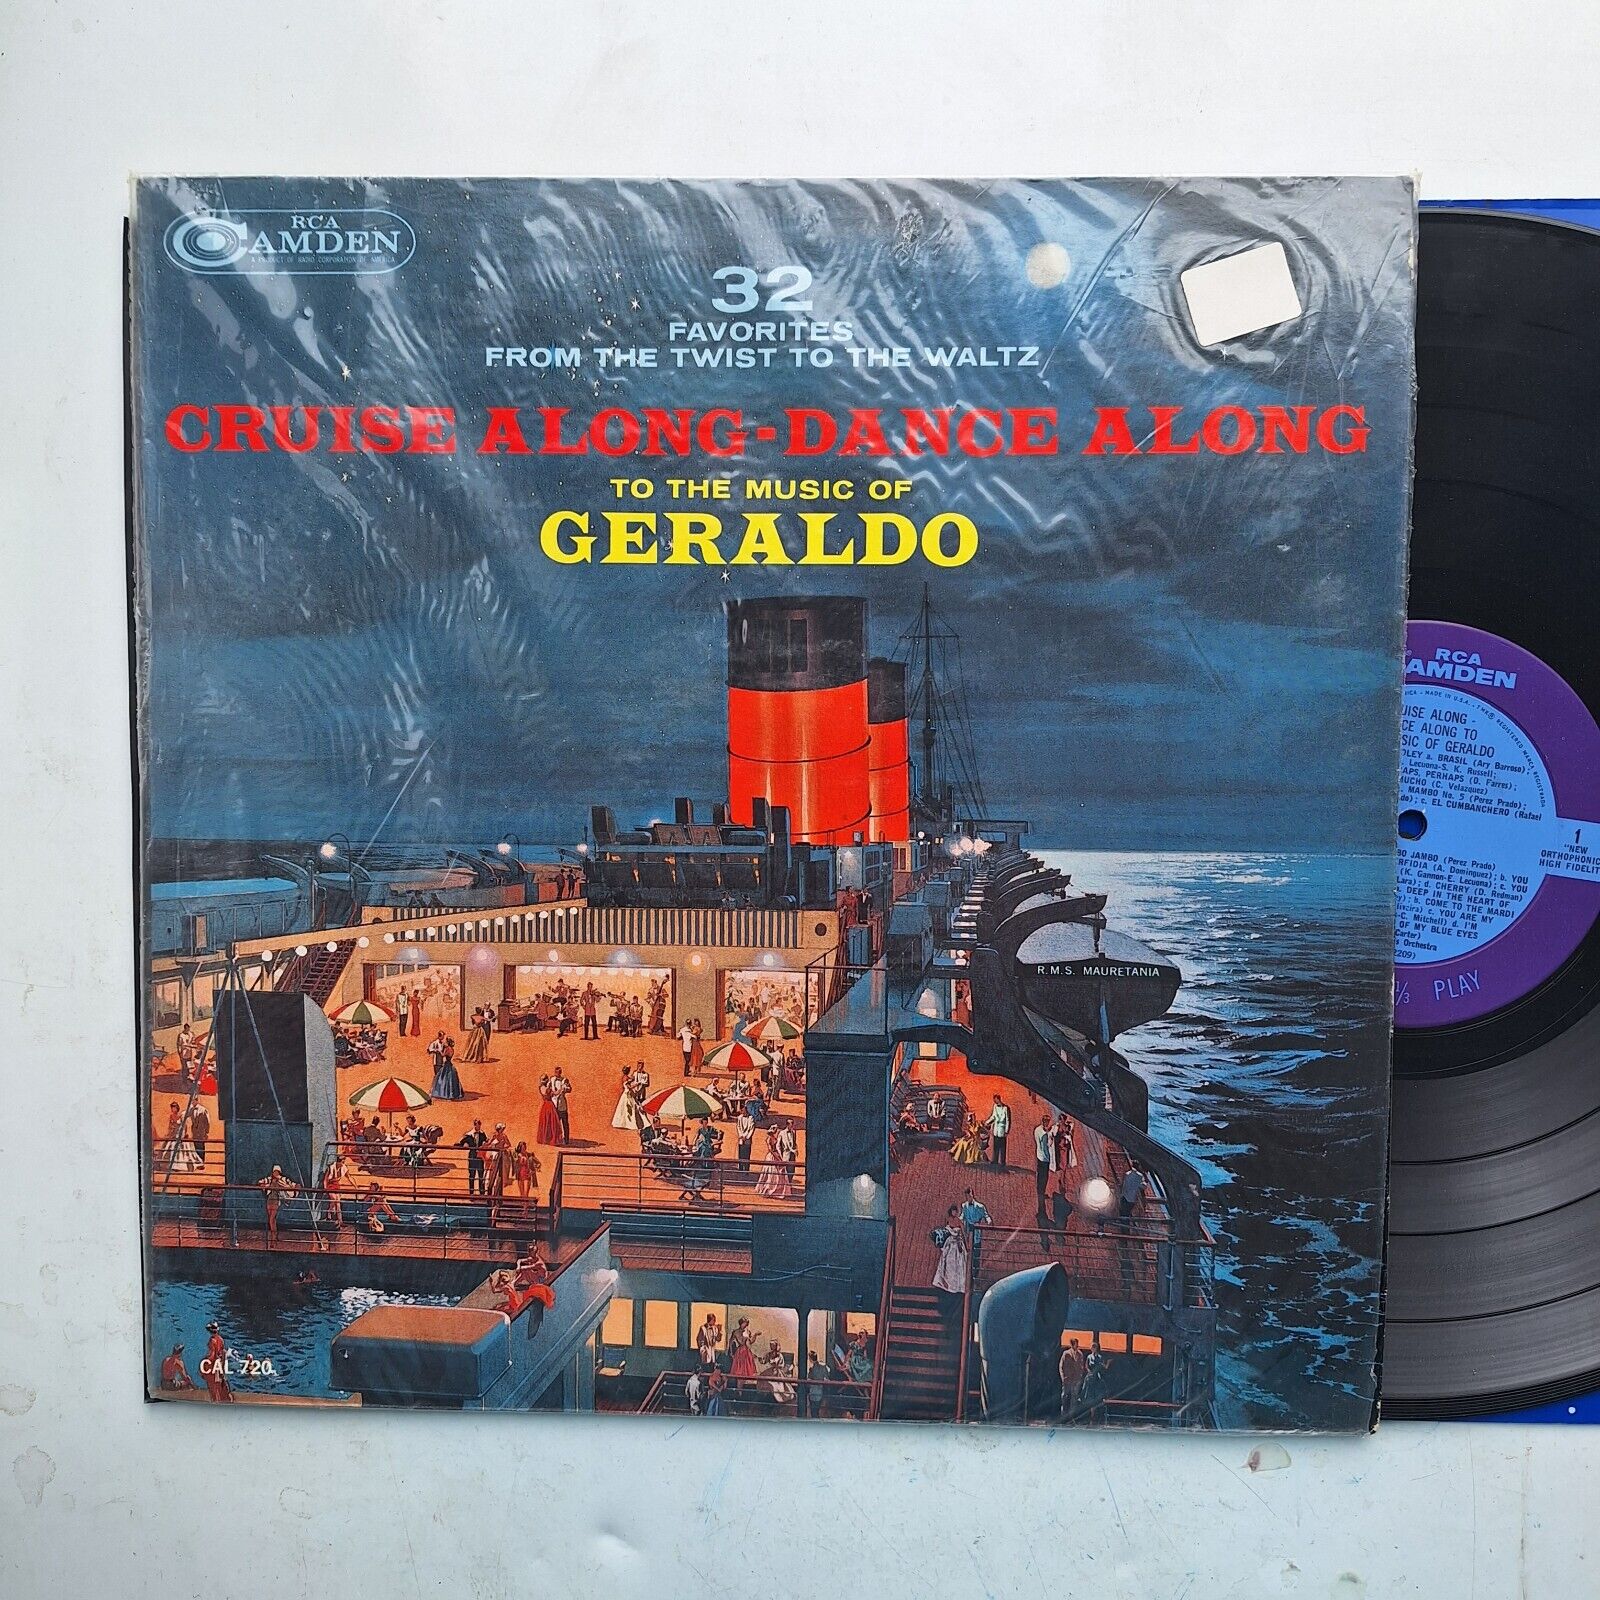 Geraldo Cruise Along-Dance Along to the Music of Geraldo Vinyl LP Shrink 1962